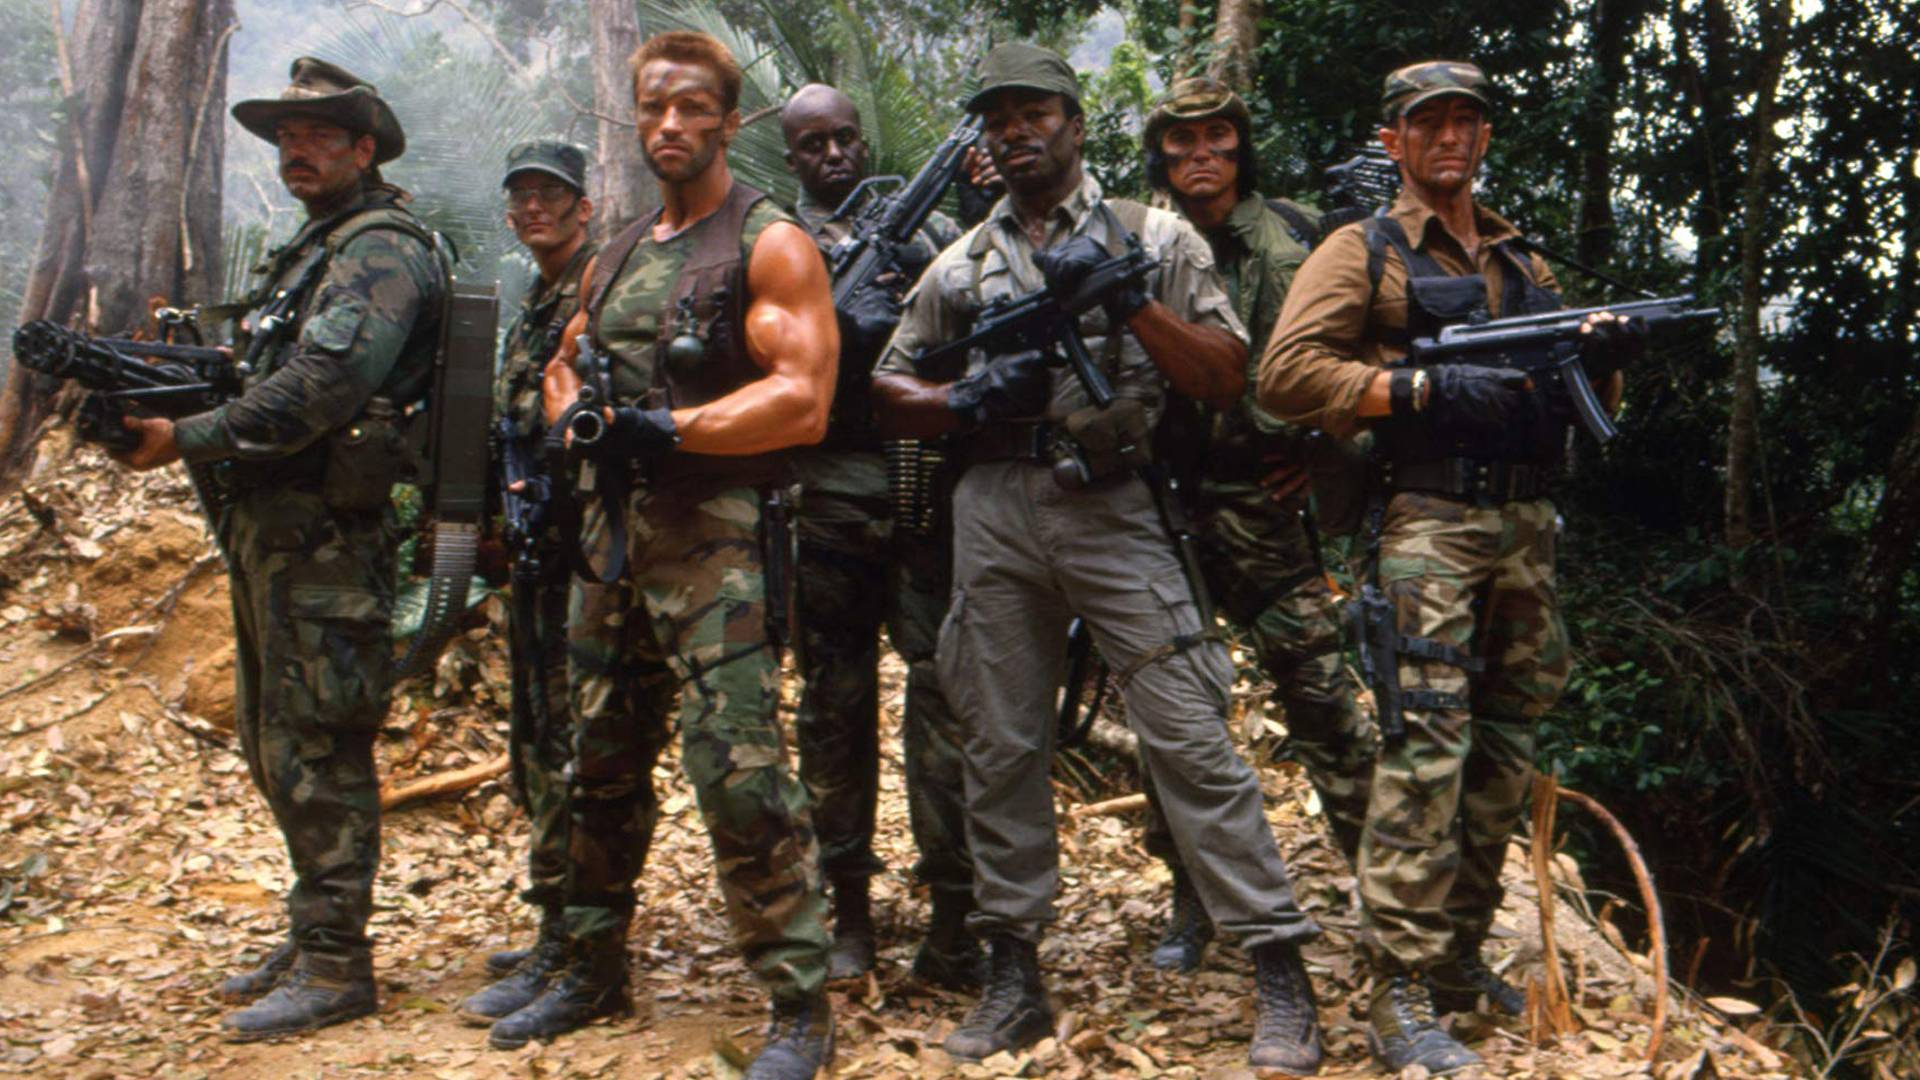 Cast of Predator (1987)